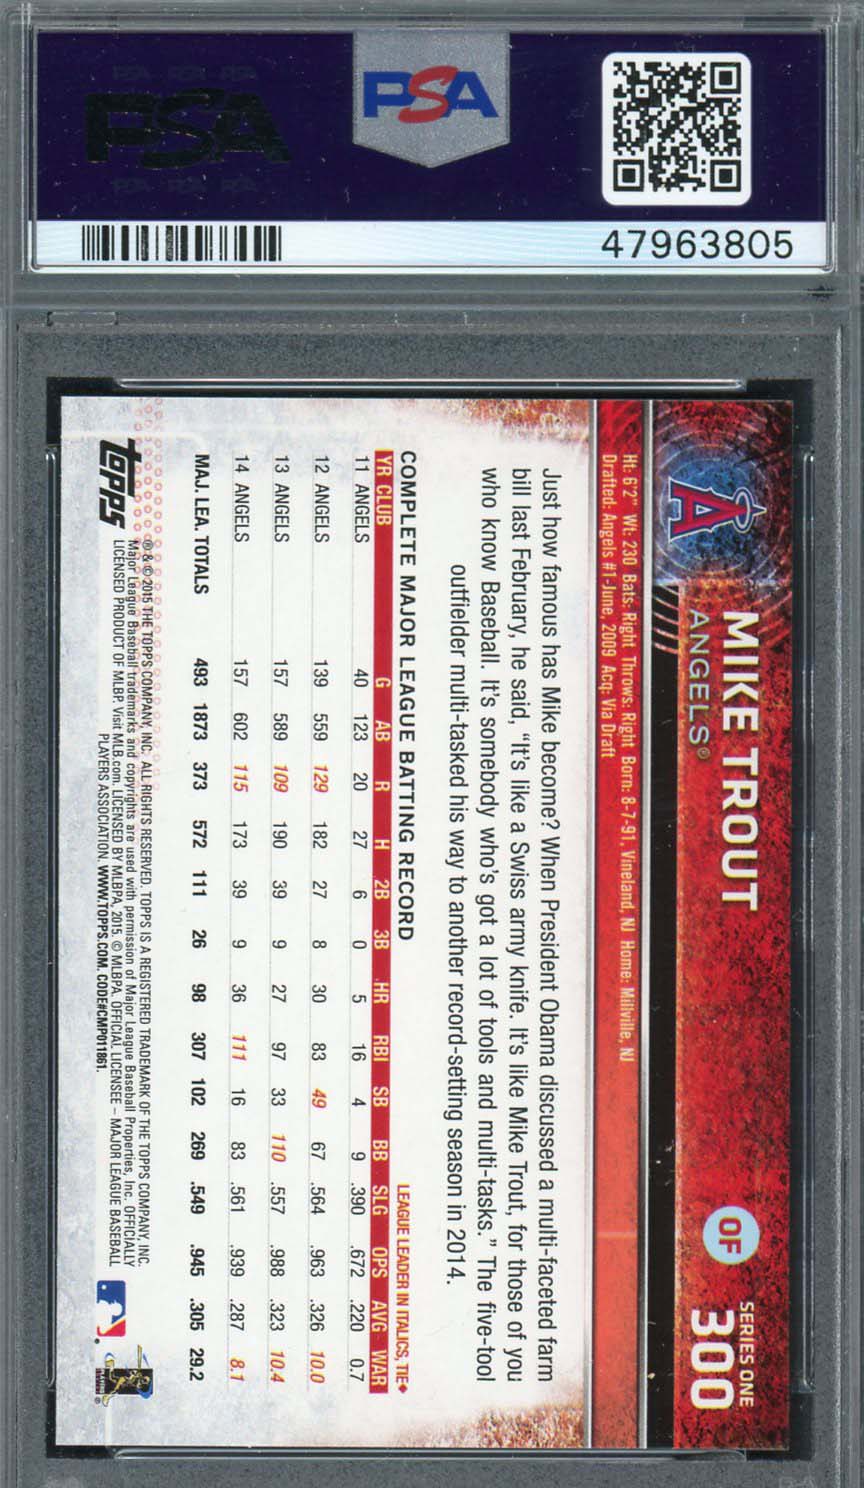 Mike Trout 2015 Topps Baseball Card #300 Graded PSA 10 GEM MINT-Powers Sports Memorabilia